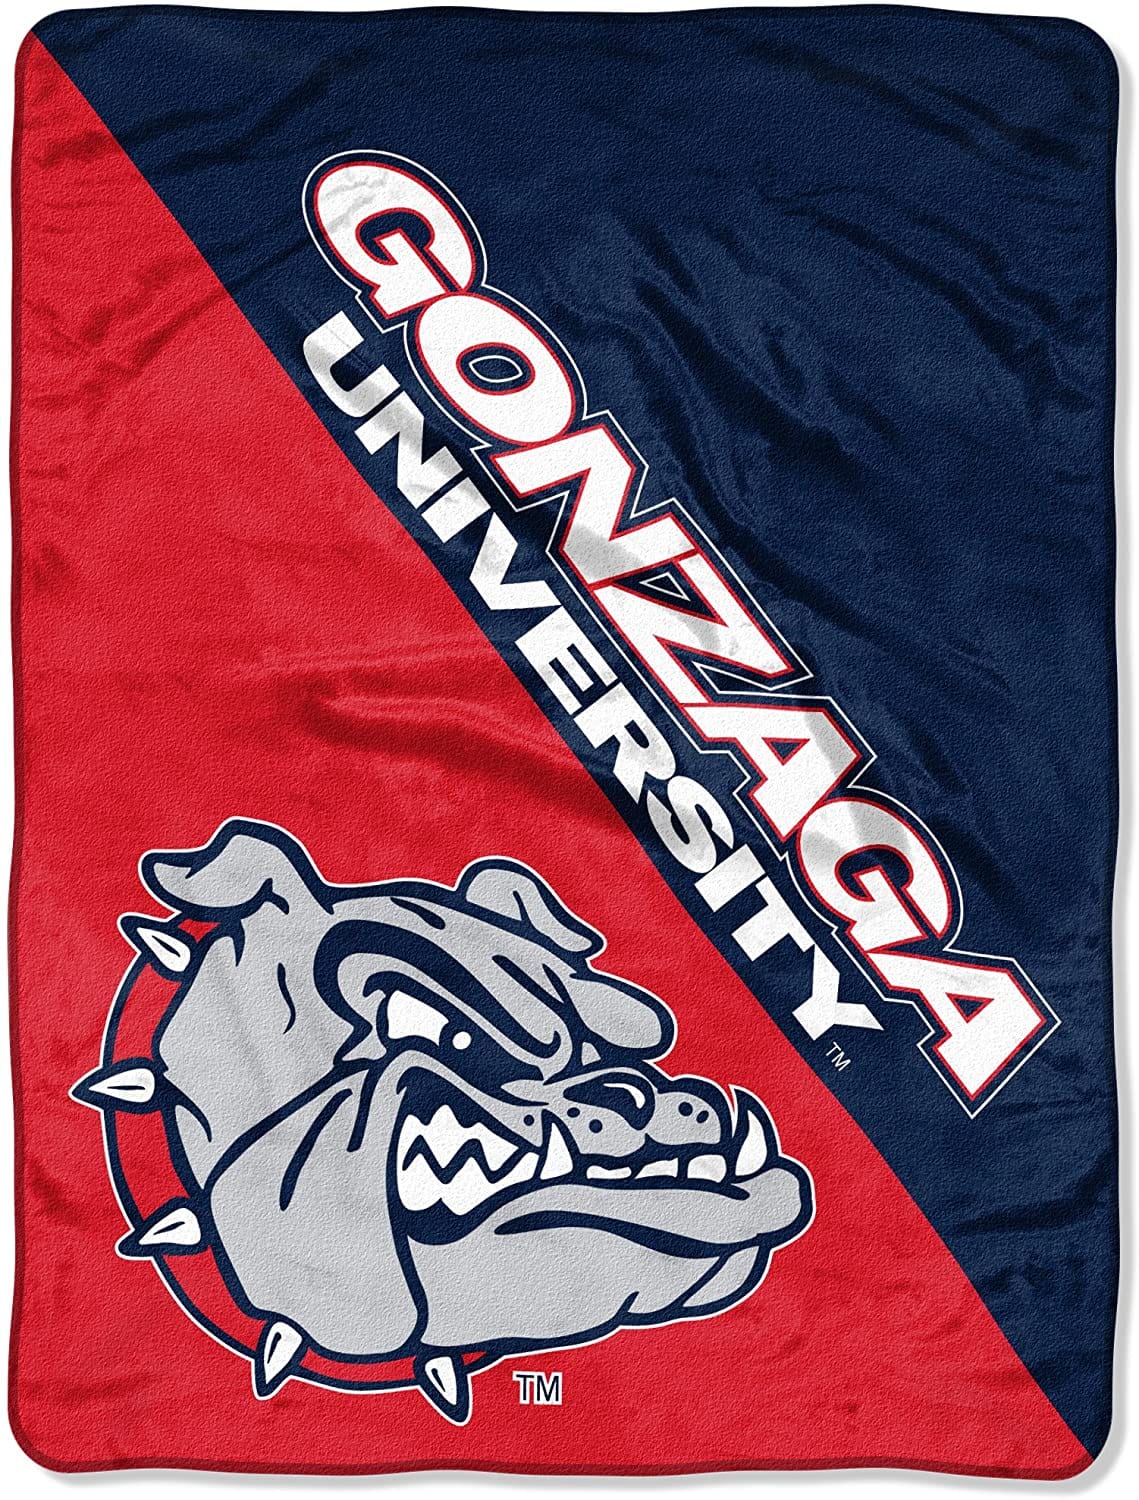 Ncaa Gonzaga Bulldogs Fleece Blanket